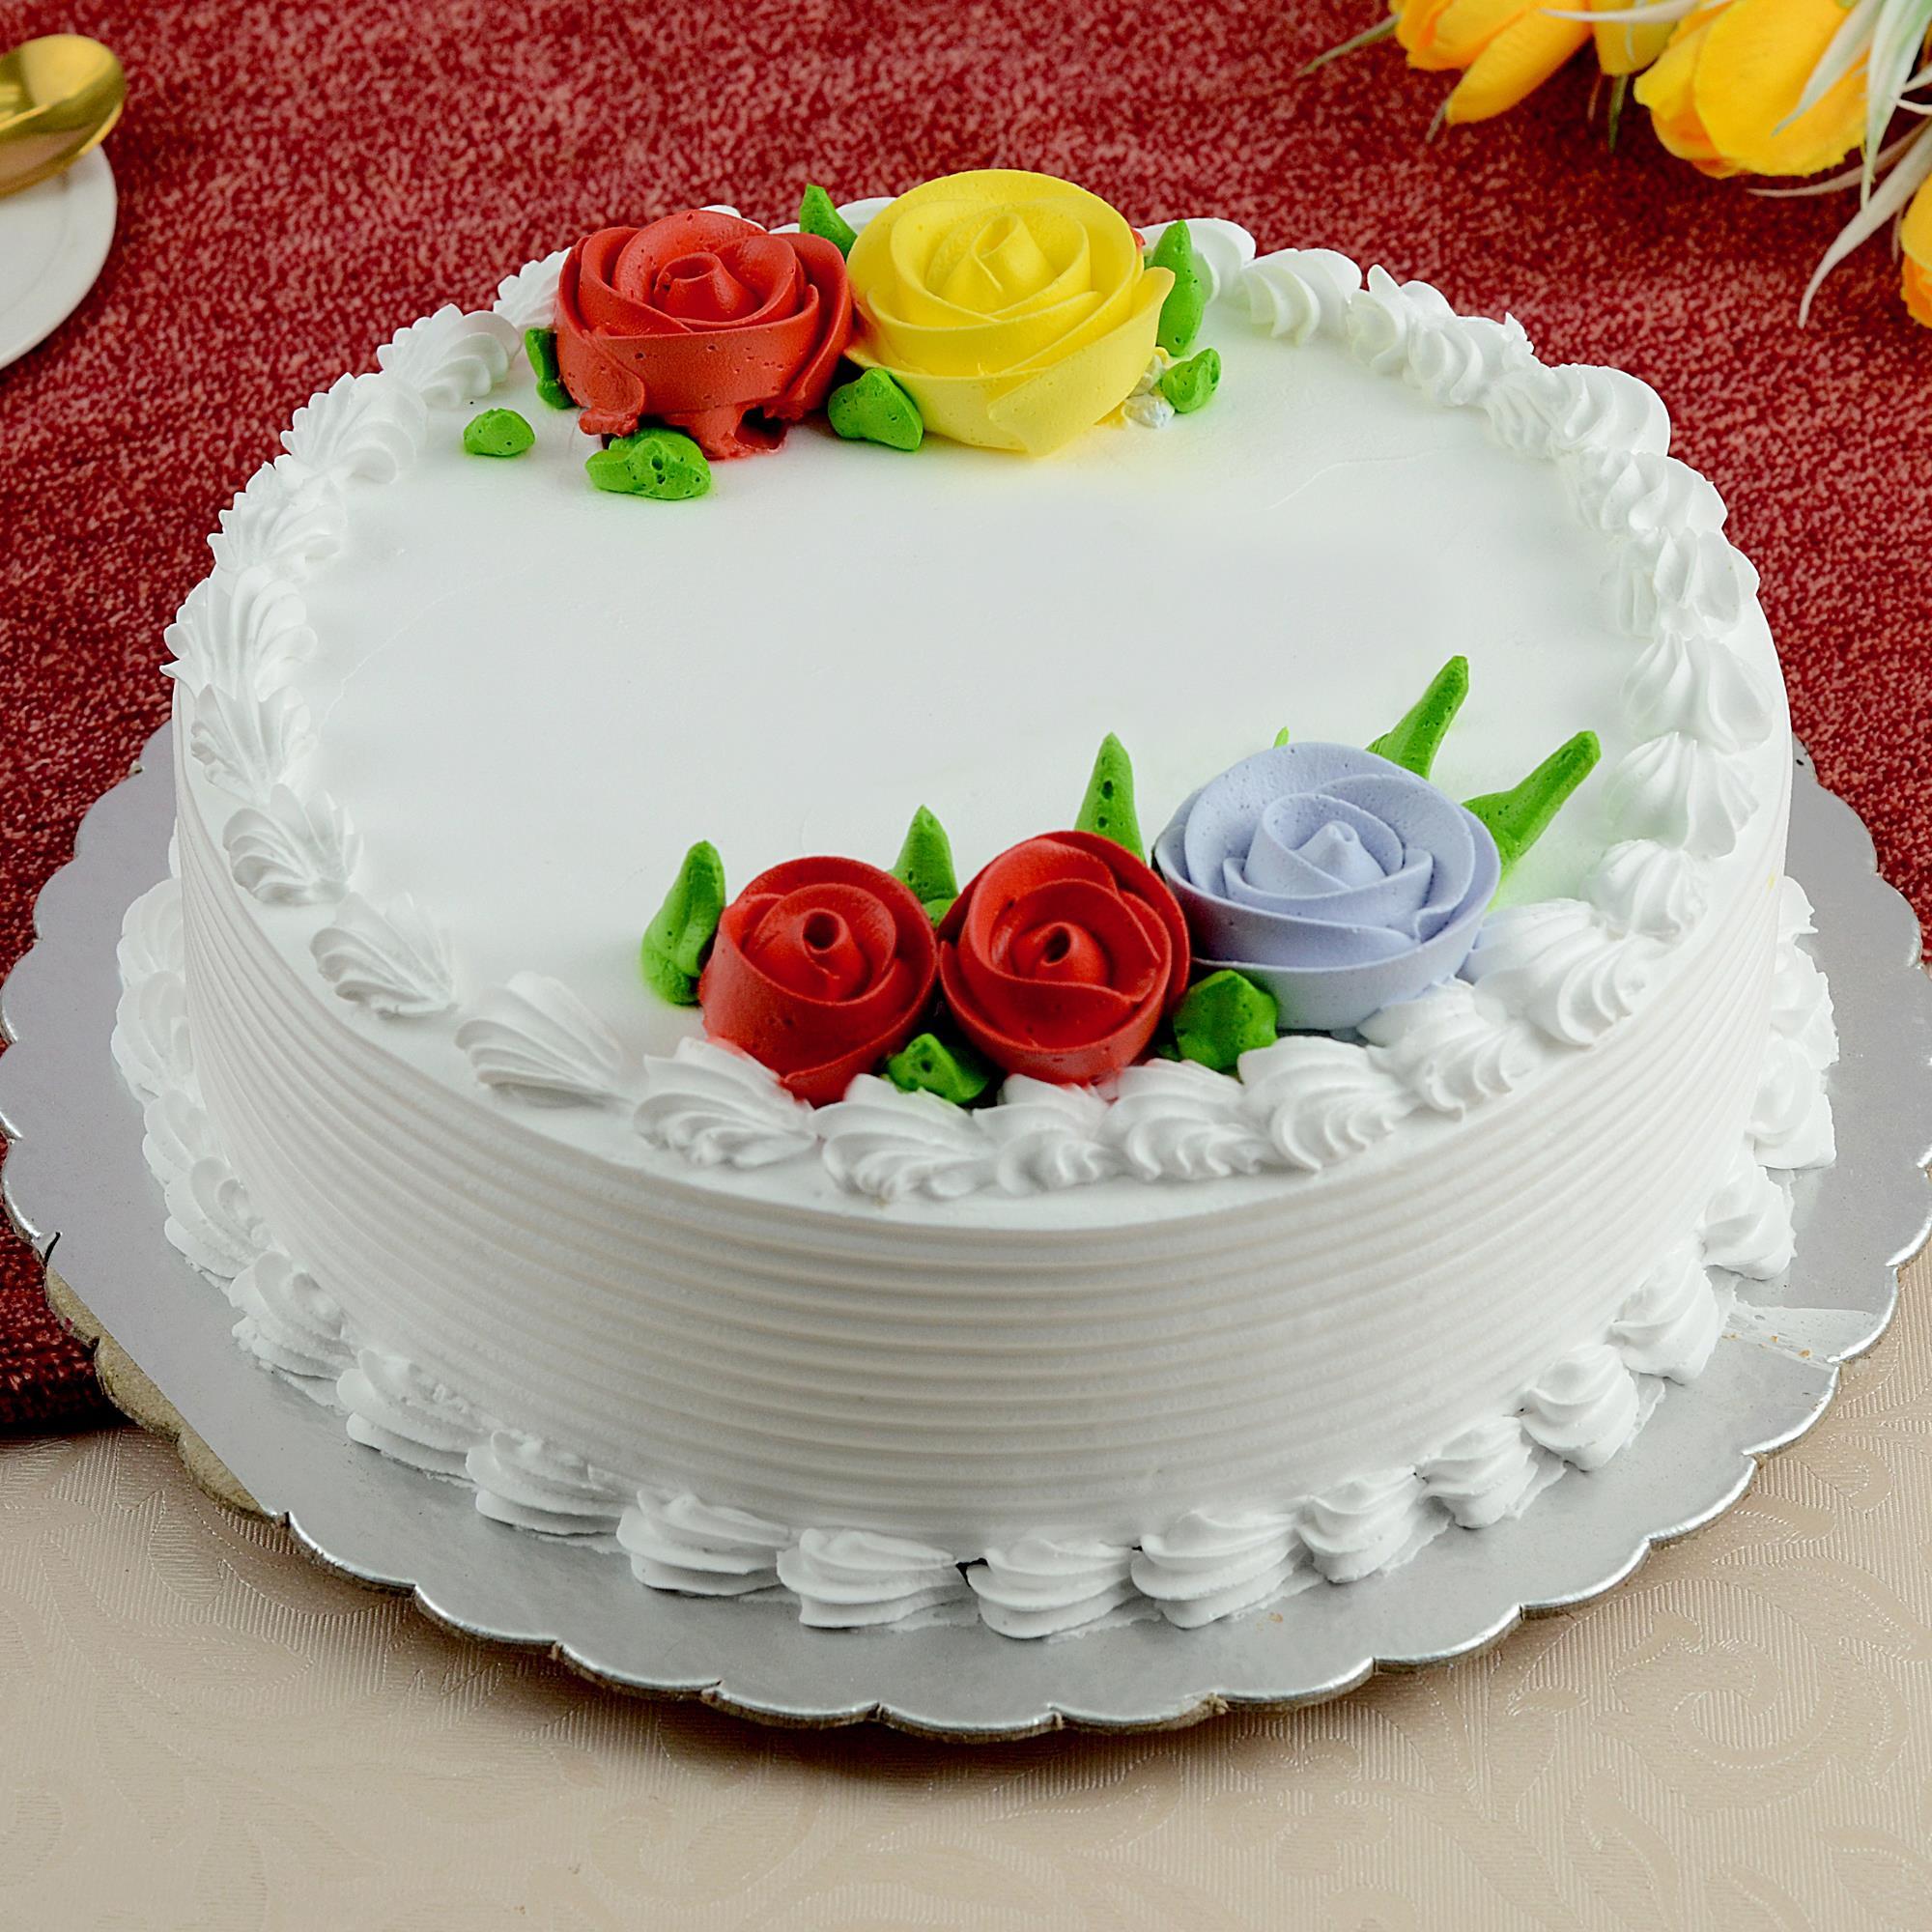 Cake Delivery in Yamunanagar Online | Send Cake to Yamunanagar - MyFlowerApp